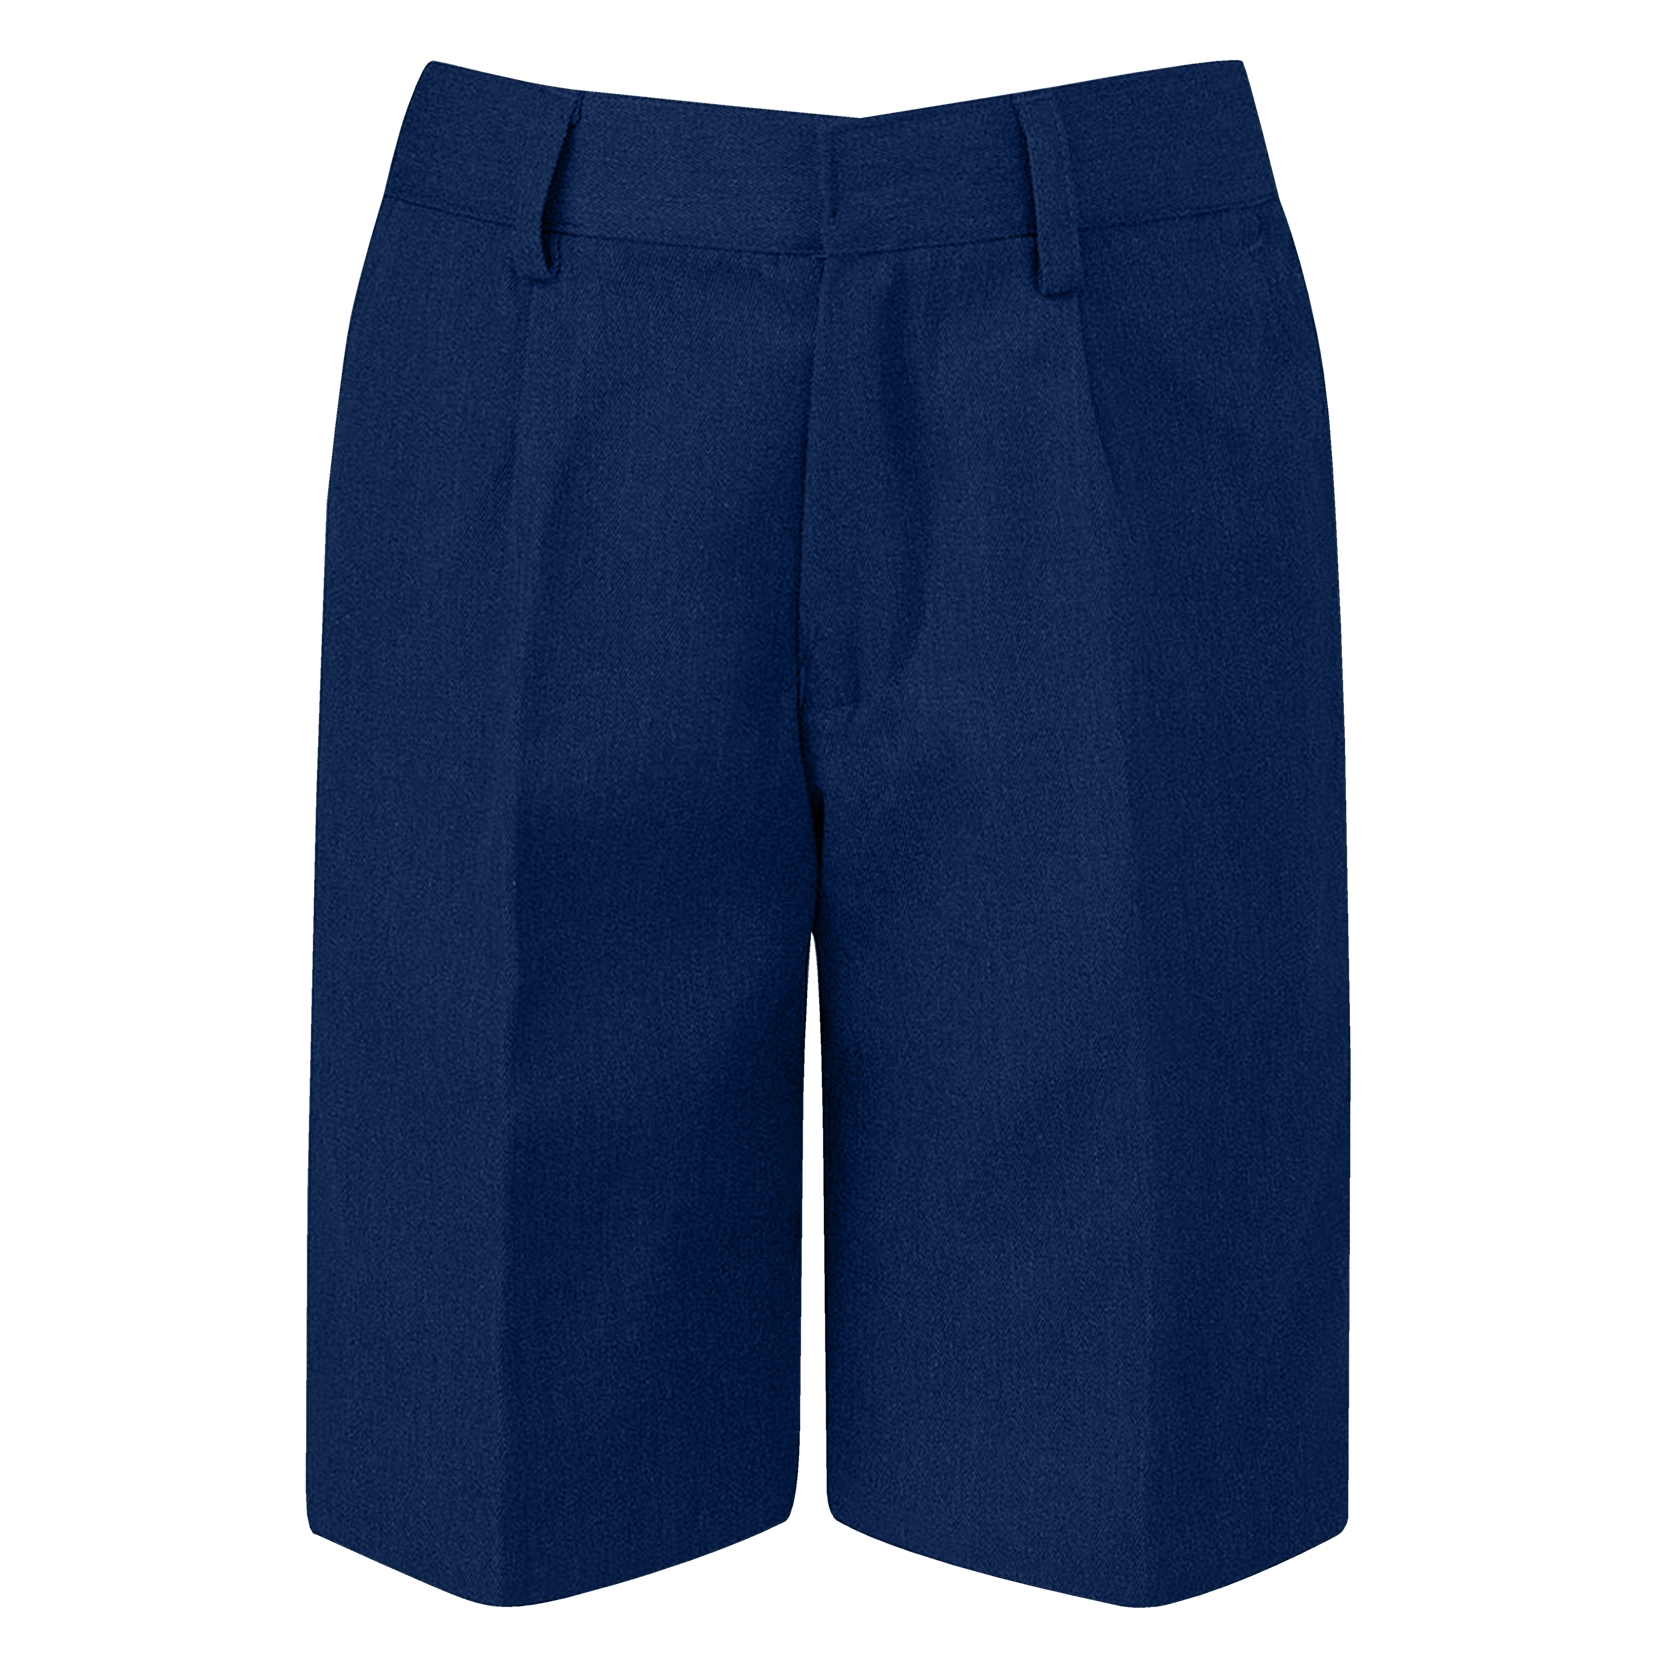 Navy Blue Shorts - Youniform